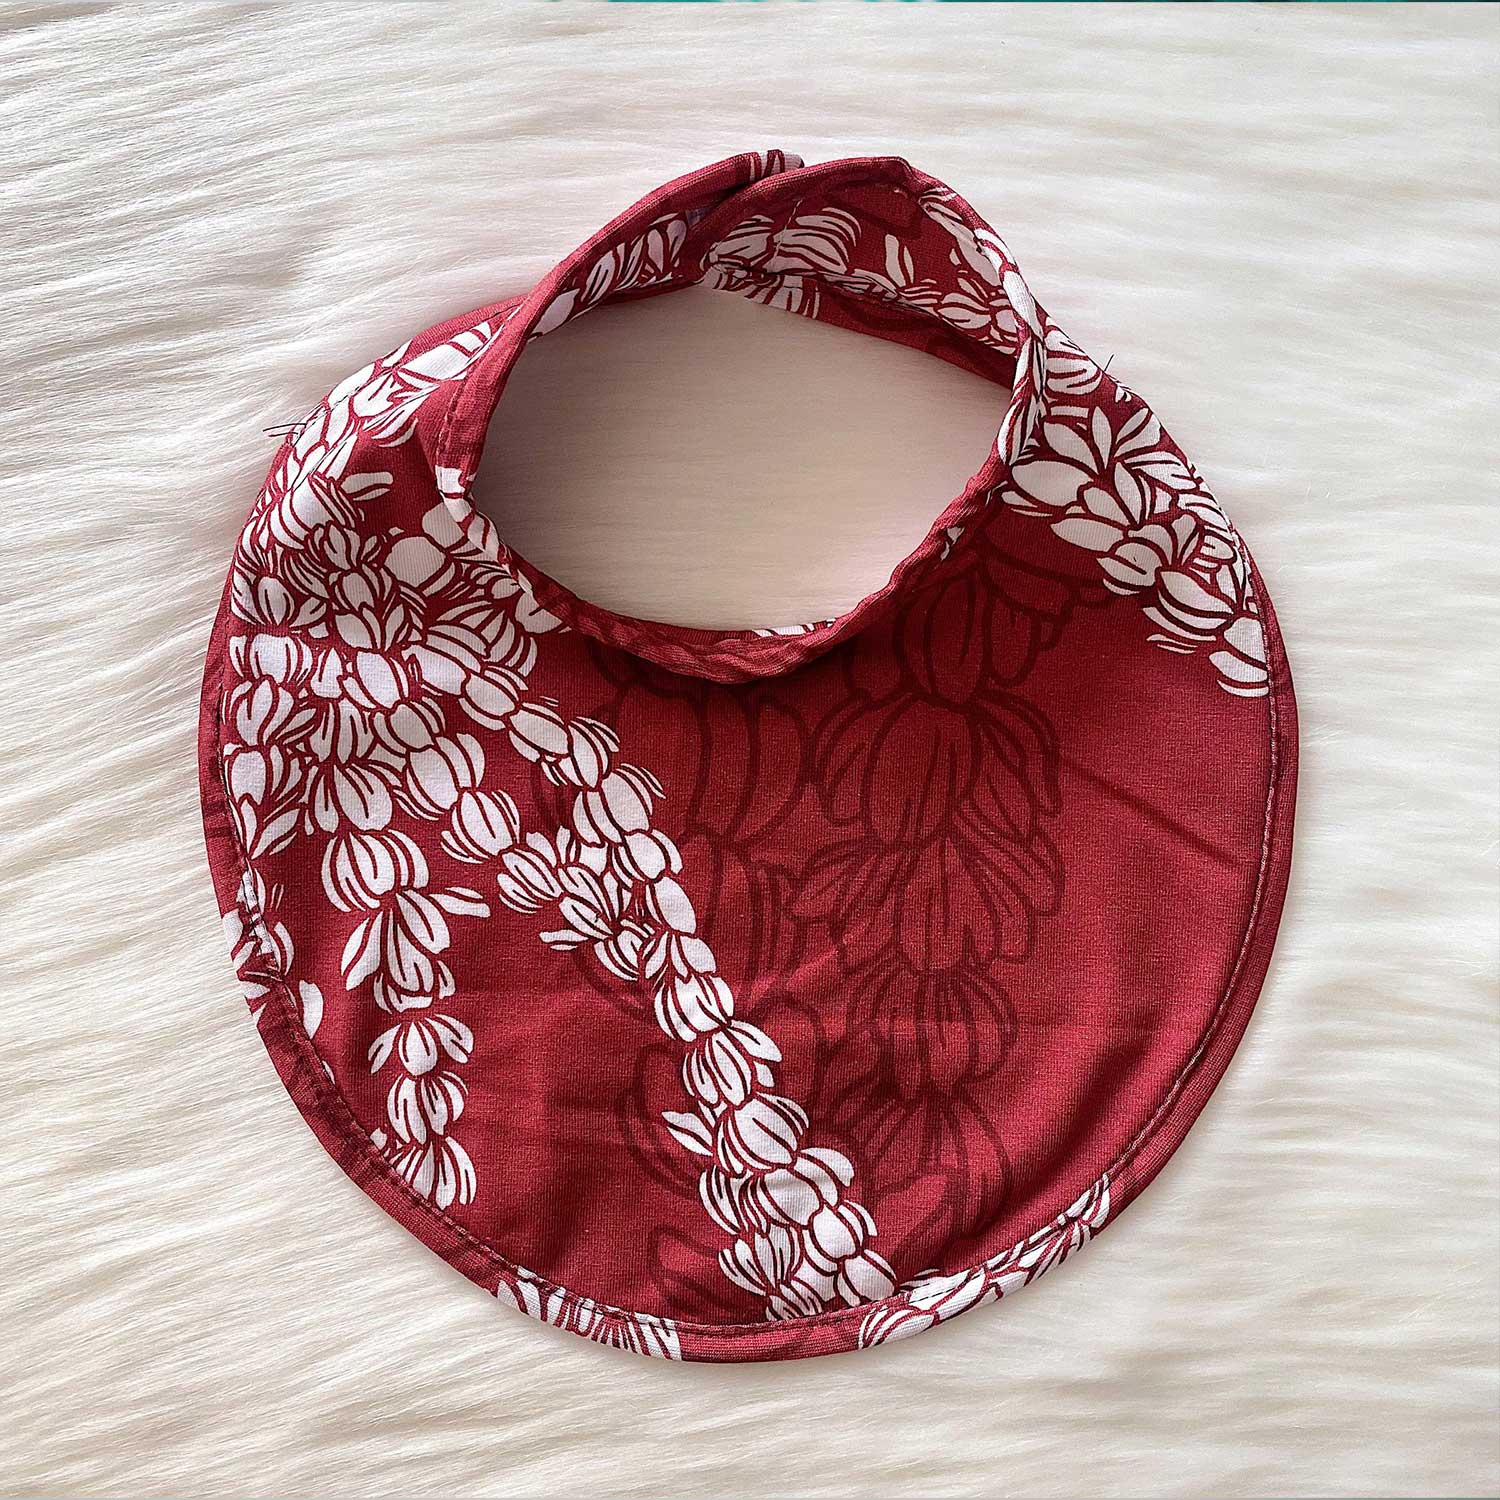 Baby Bib Modal Fabric & Velcro Lei Pīkake Print - Berry